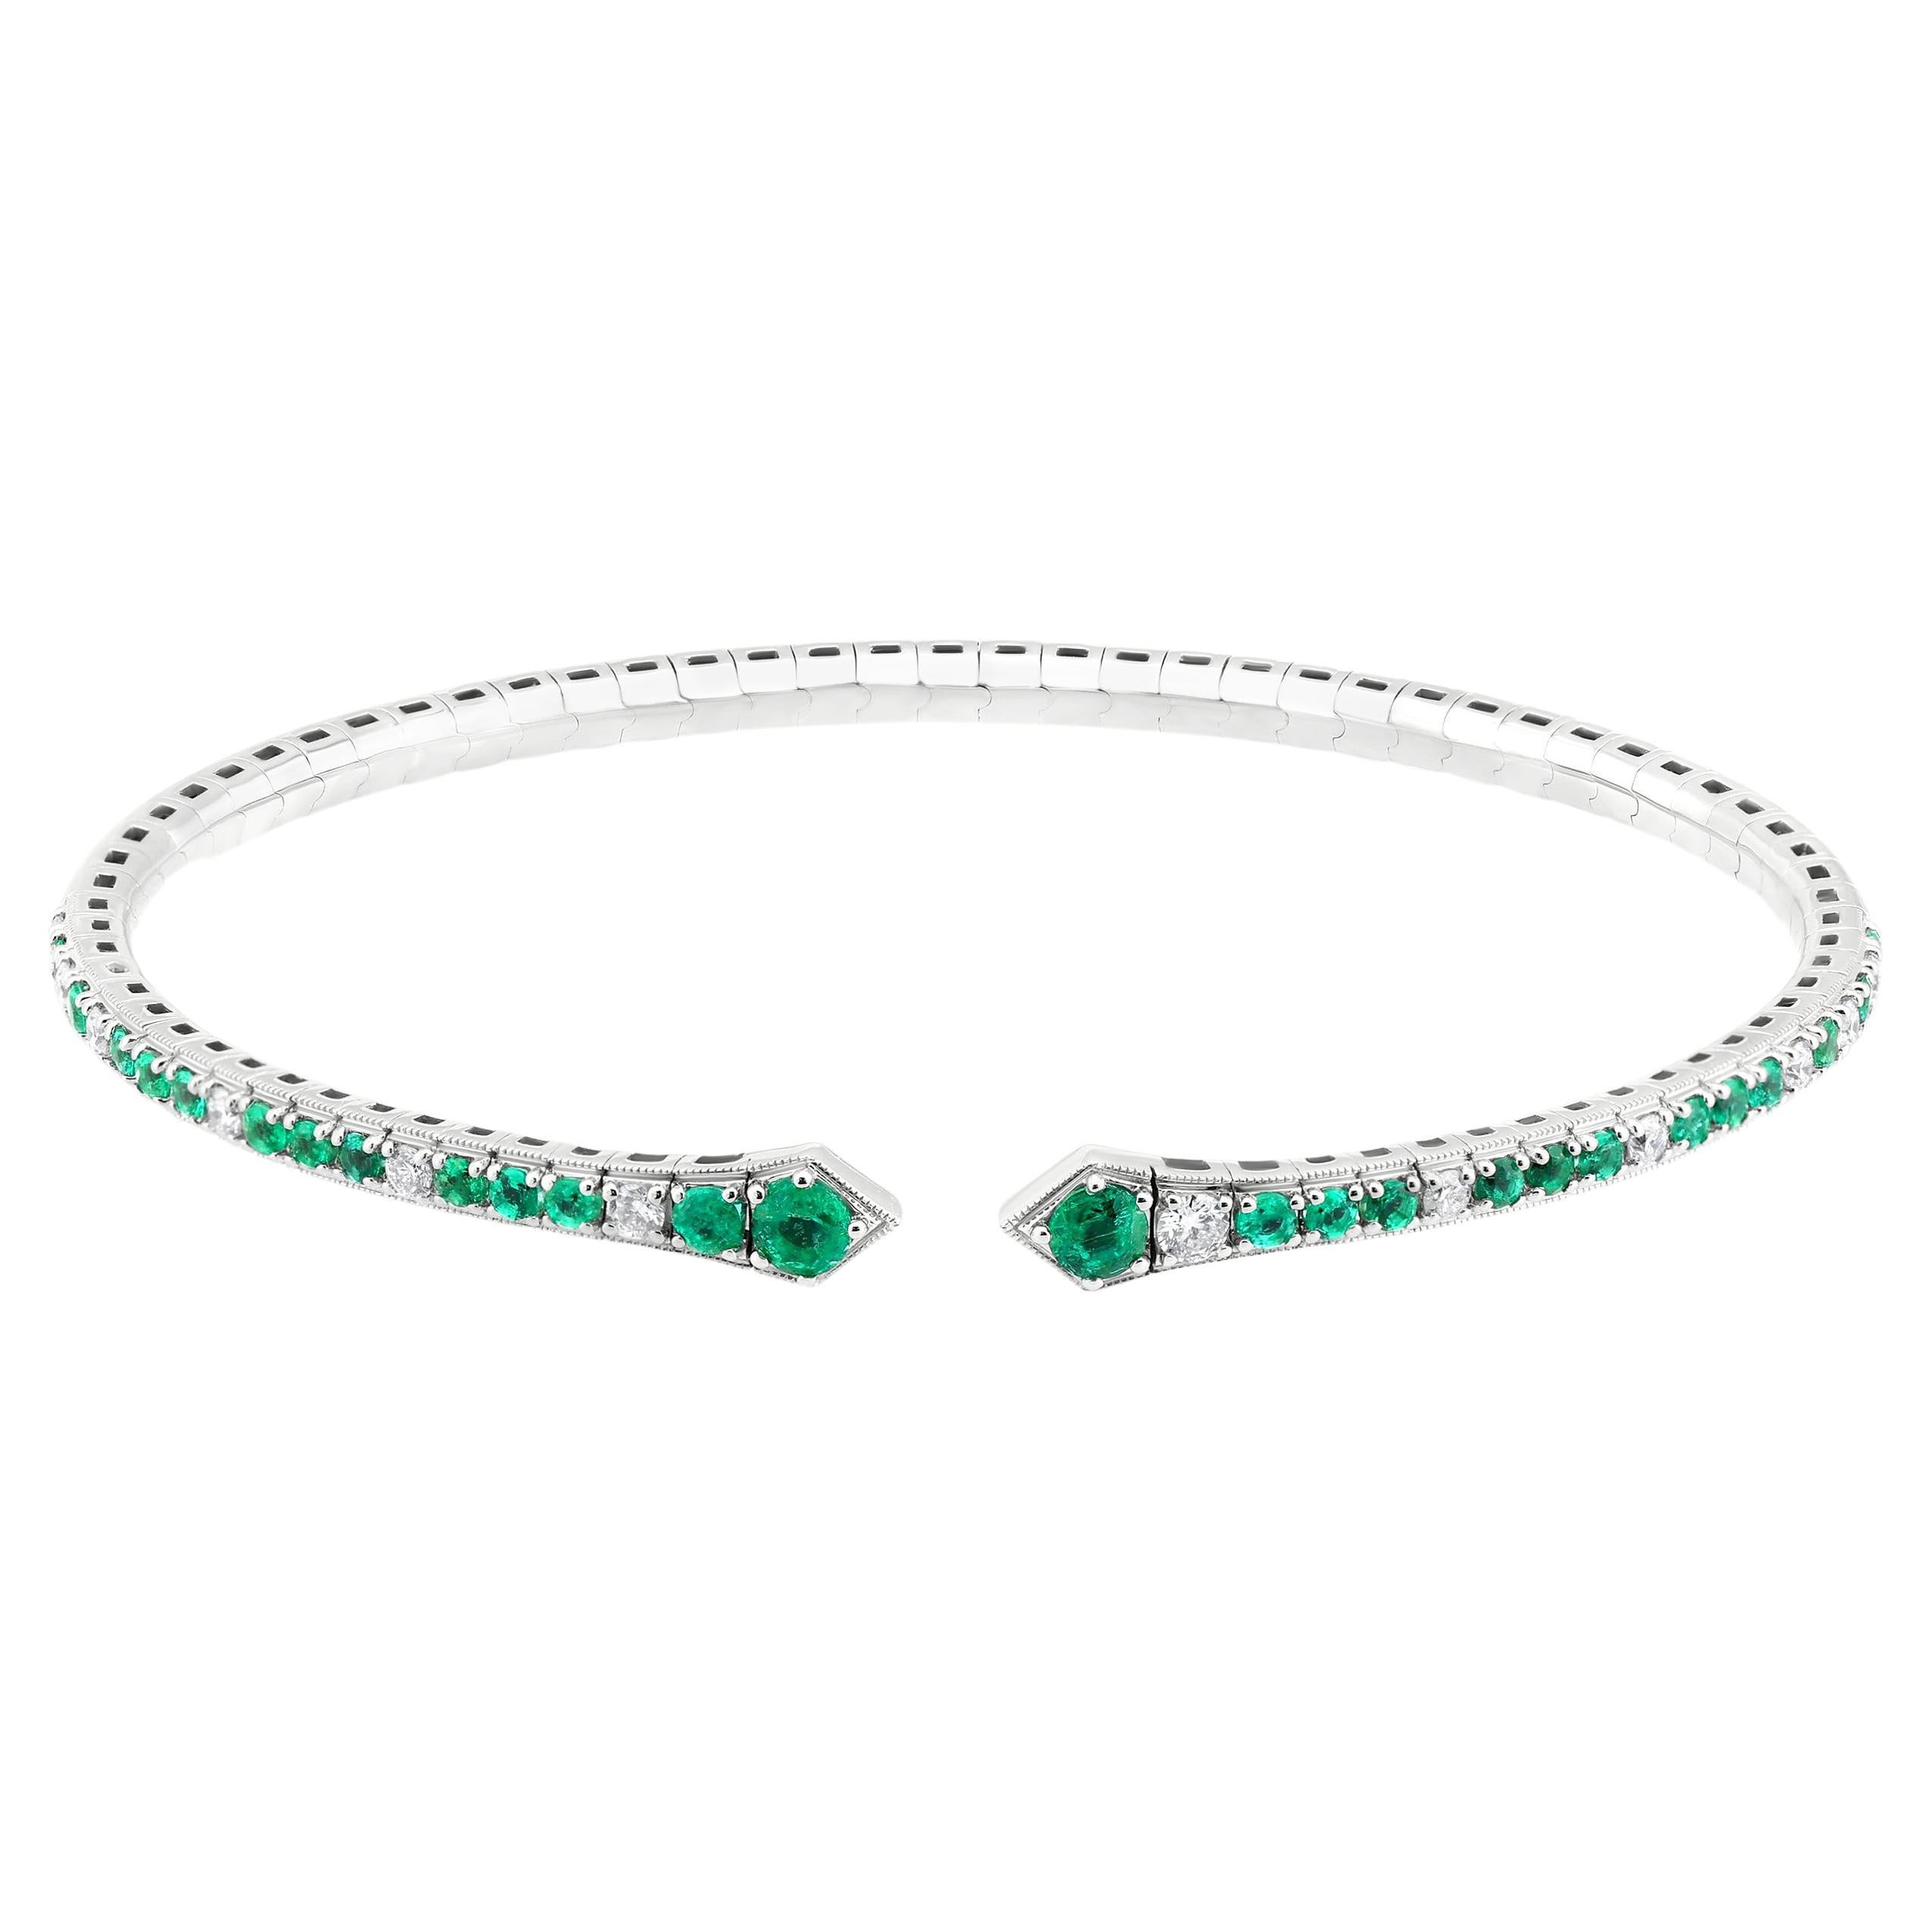 Luxle 1.39 Cttw. Emerald and Diamond Serpentine Cuff Bracelets in 18k White Gold